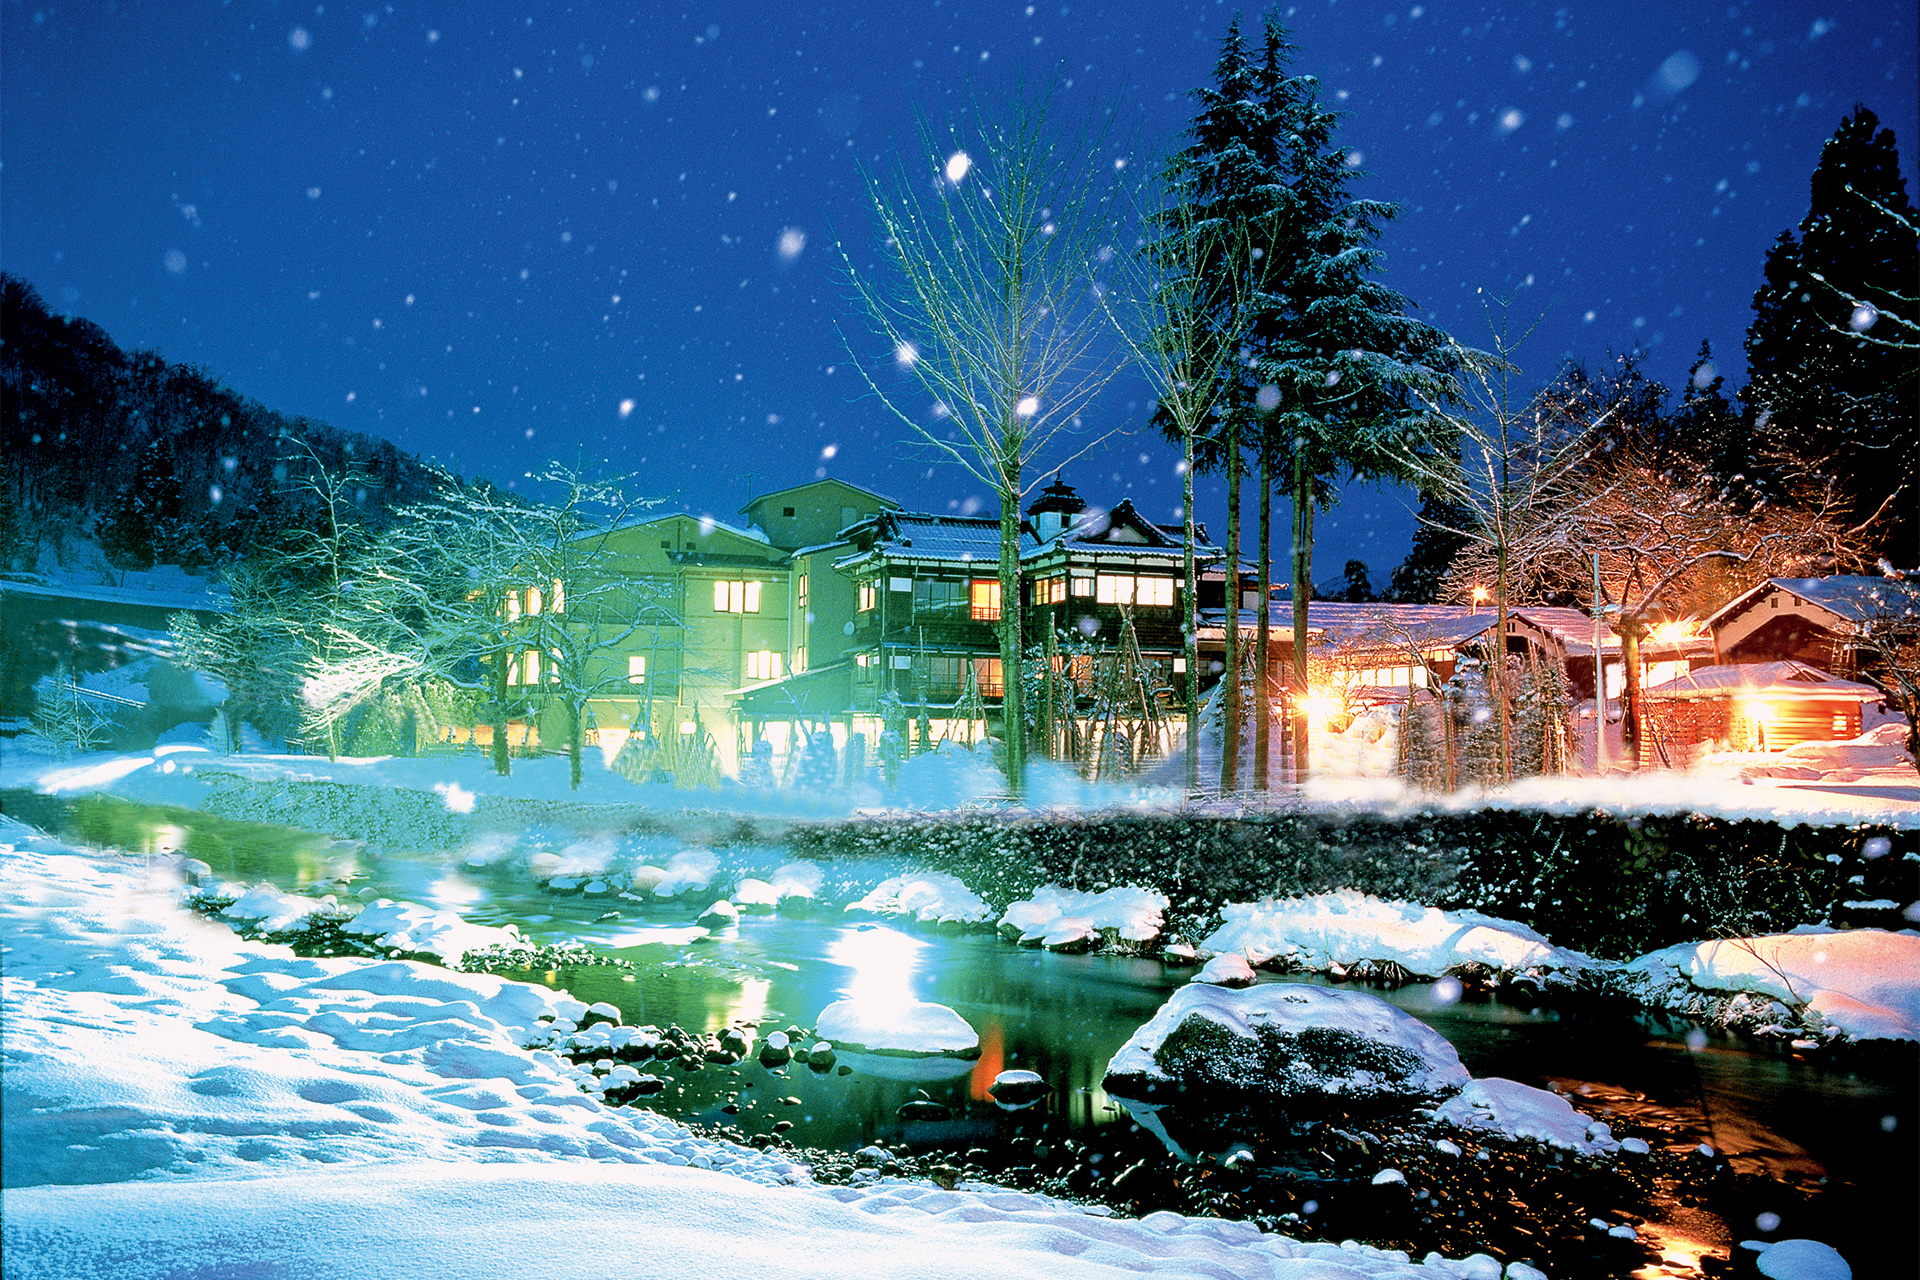 Rankeisou Inn, a hotel with a secret hot spring in deep snow